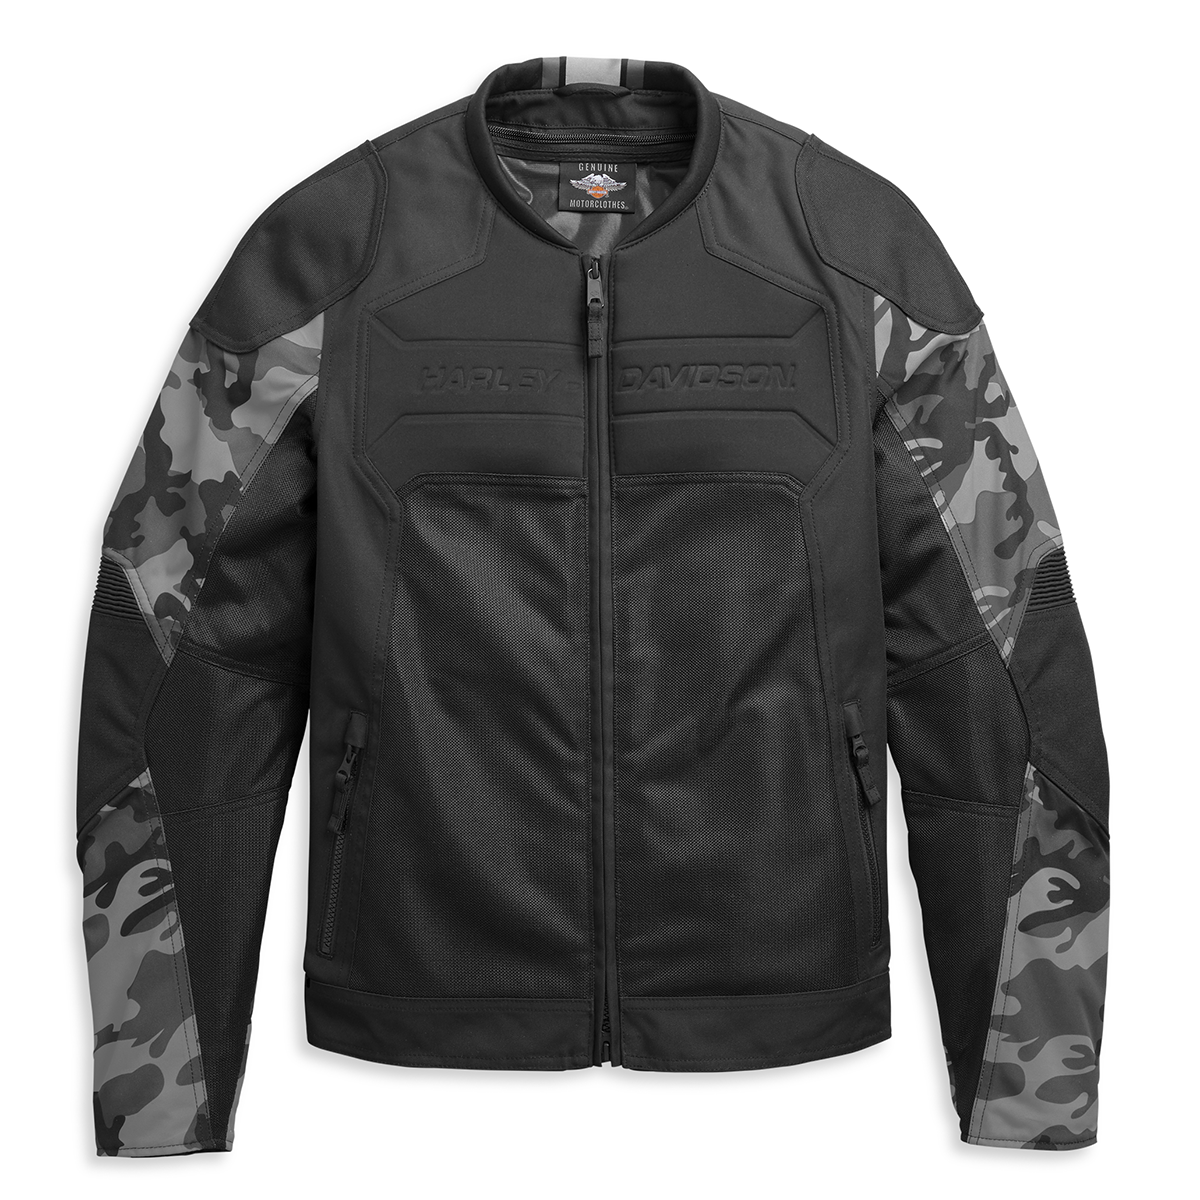 Harley Davidson FXRG Series 1 Leather Jacket Sz S